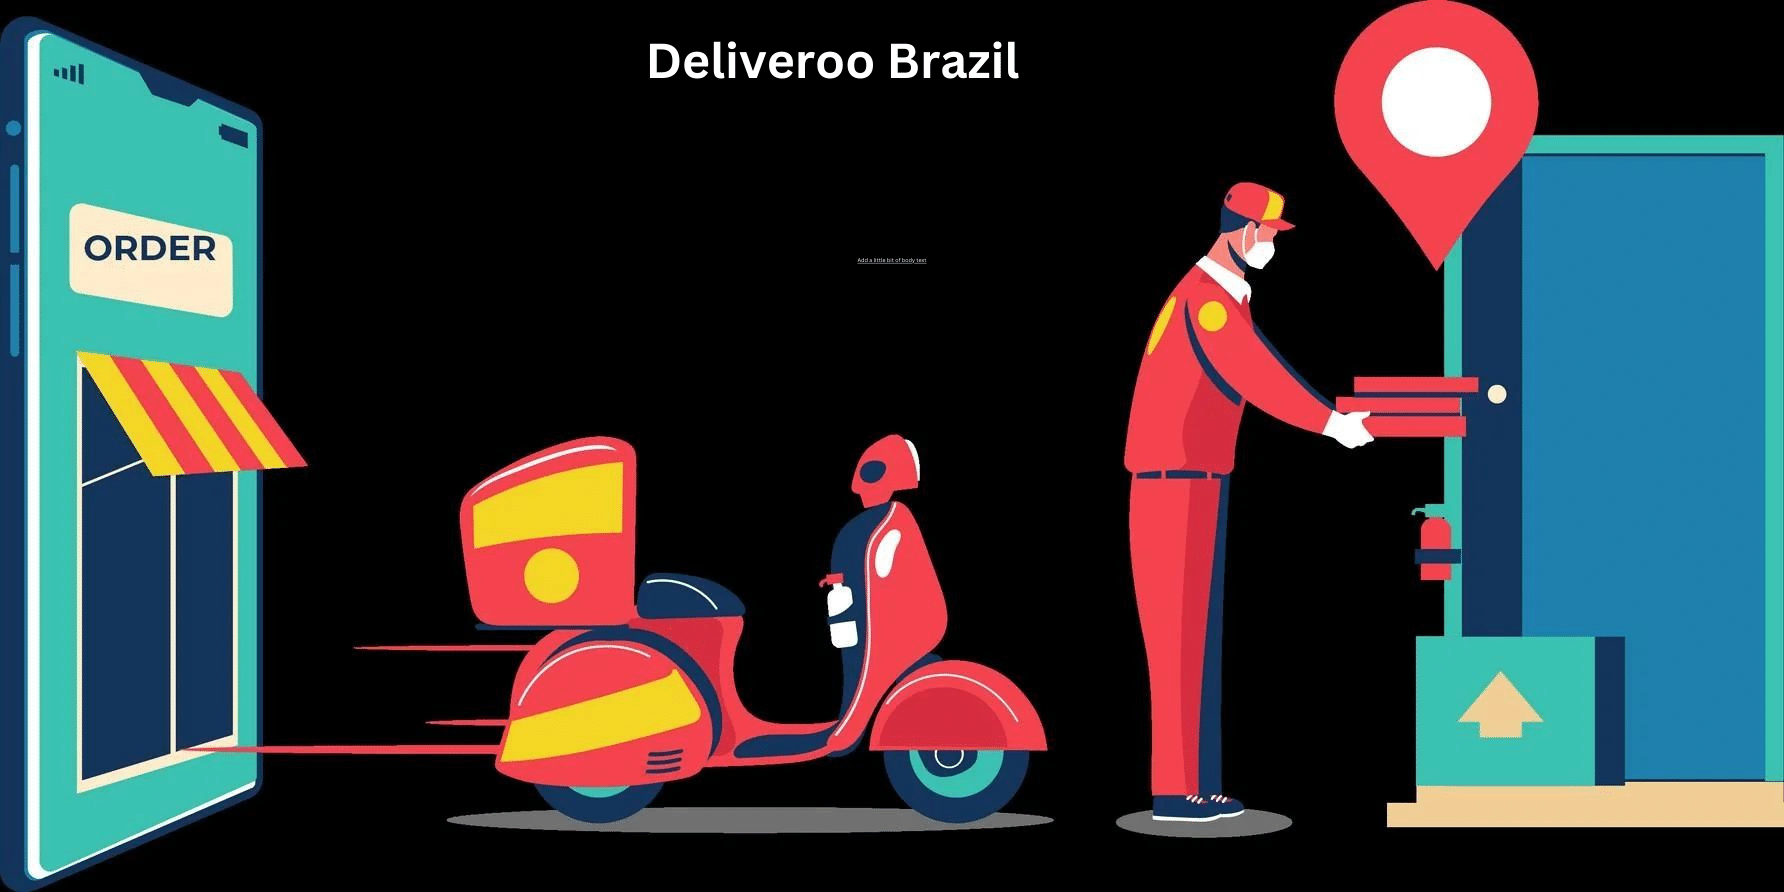 Deliveroo Brazil